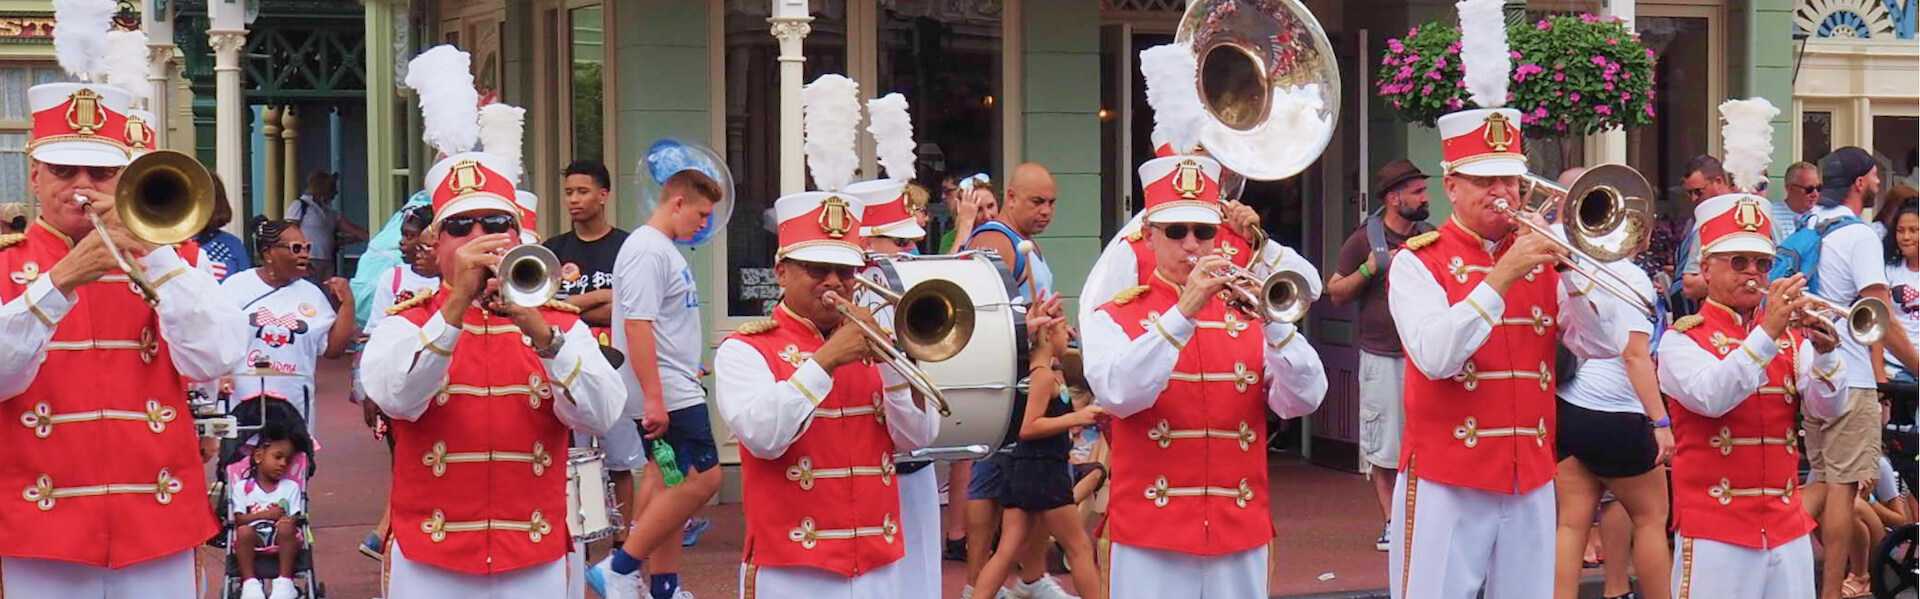 Central Florida Musicians' Association Street Musicians of Disney